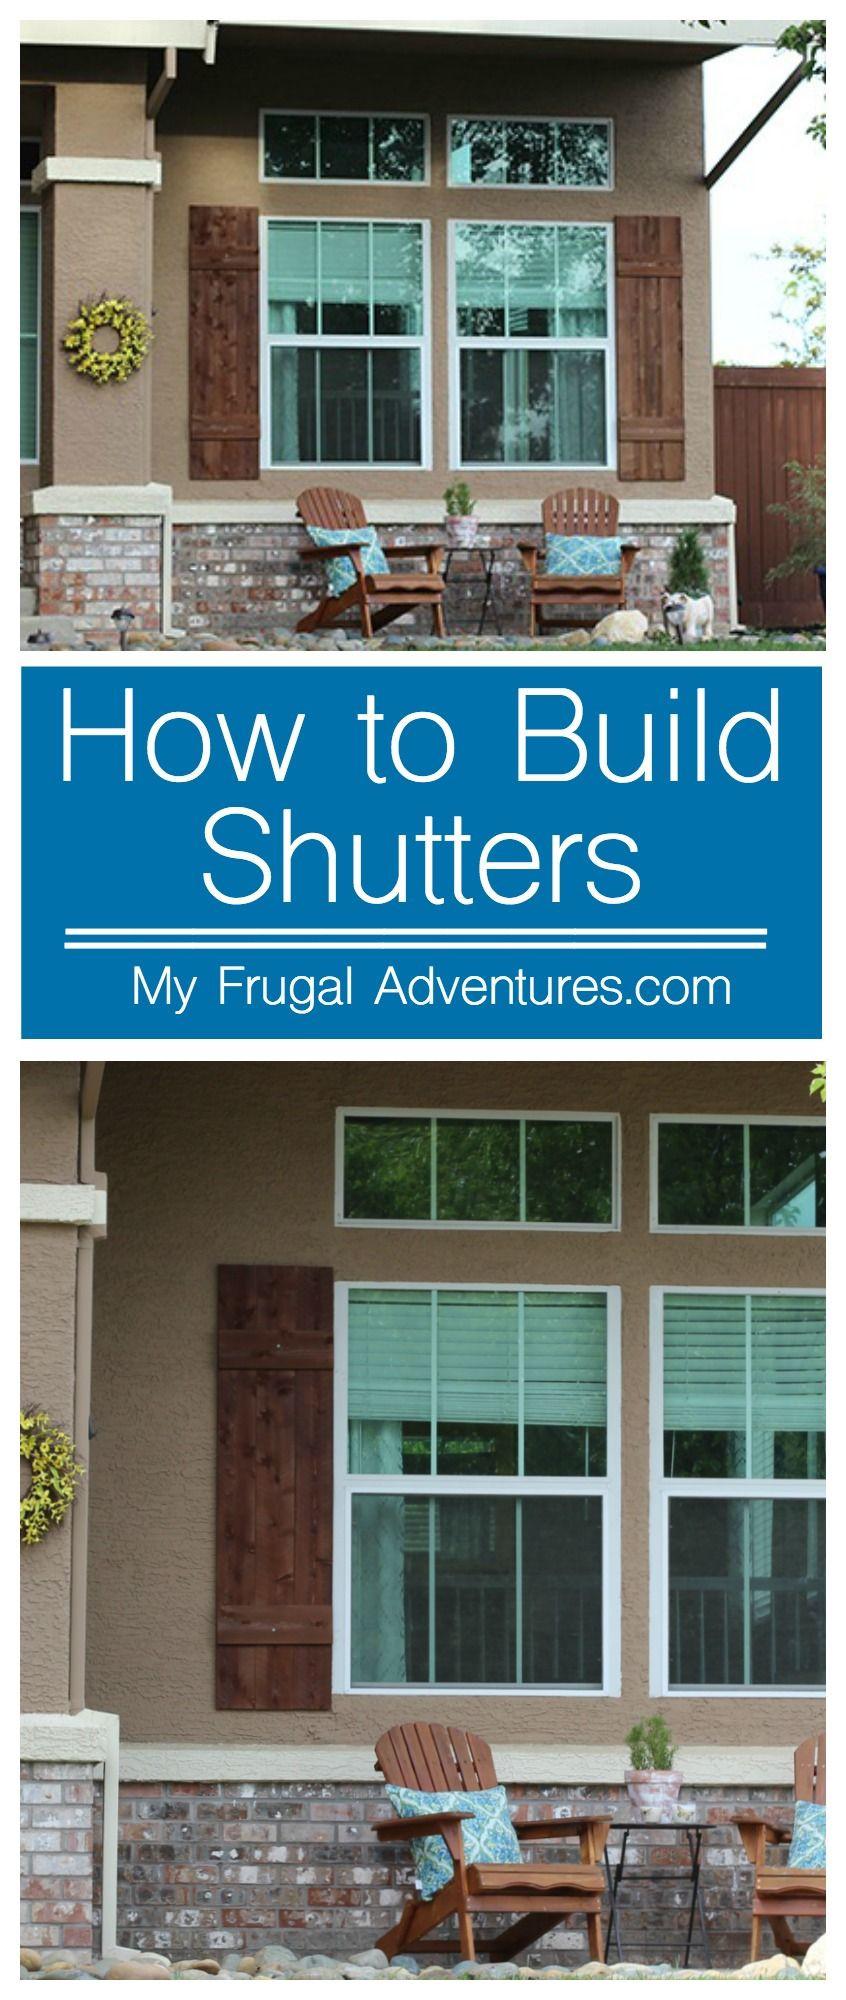 DIY Outdoor Shutters
 How to Build Outdoor Shutters